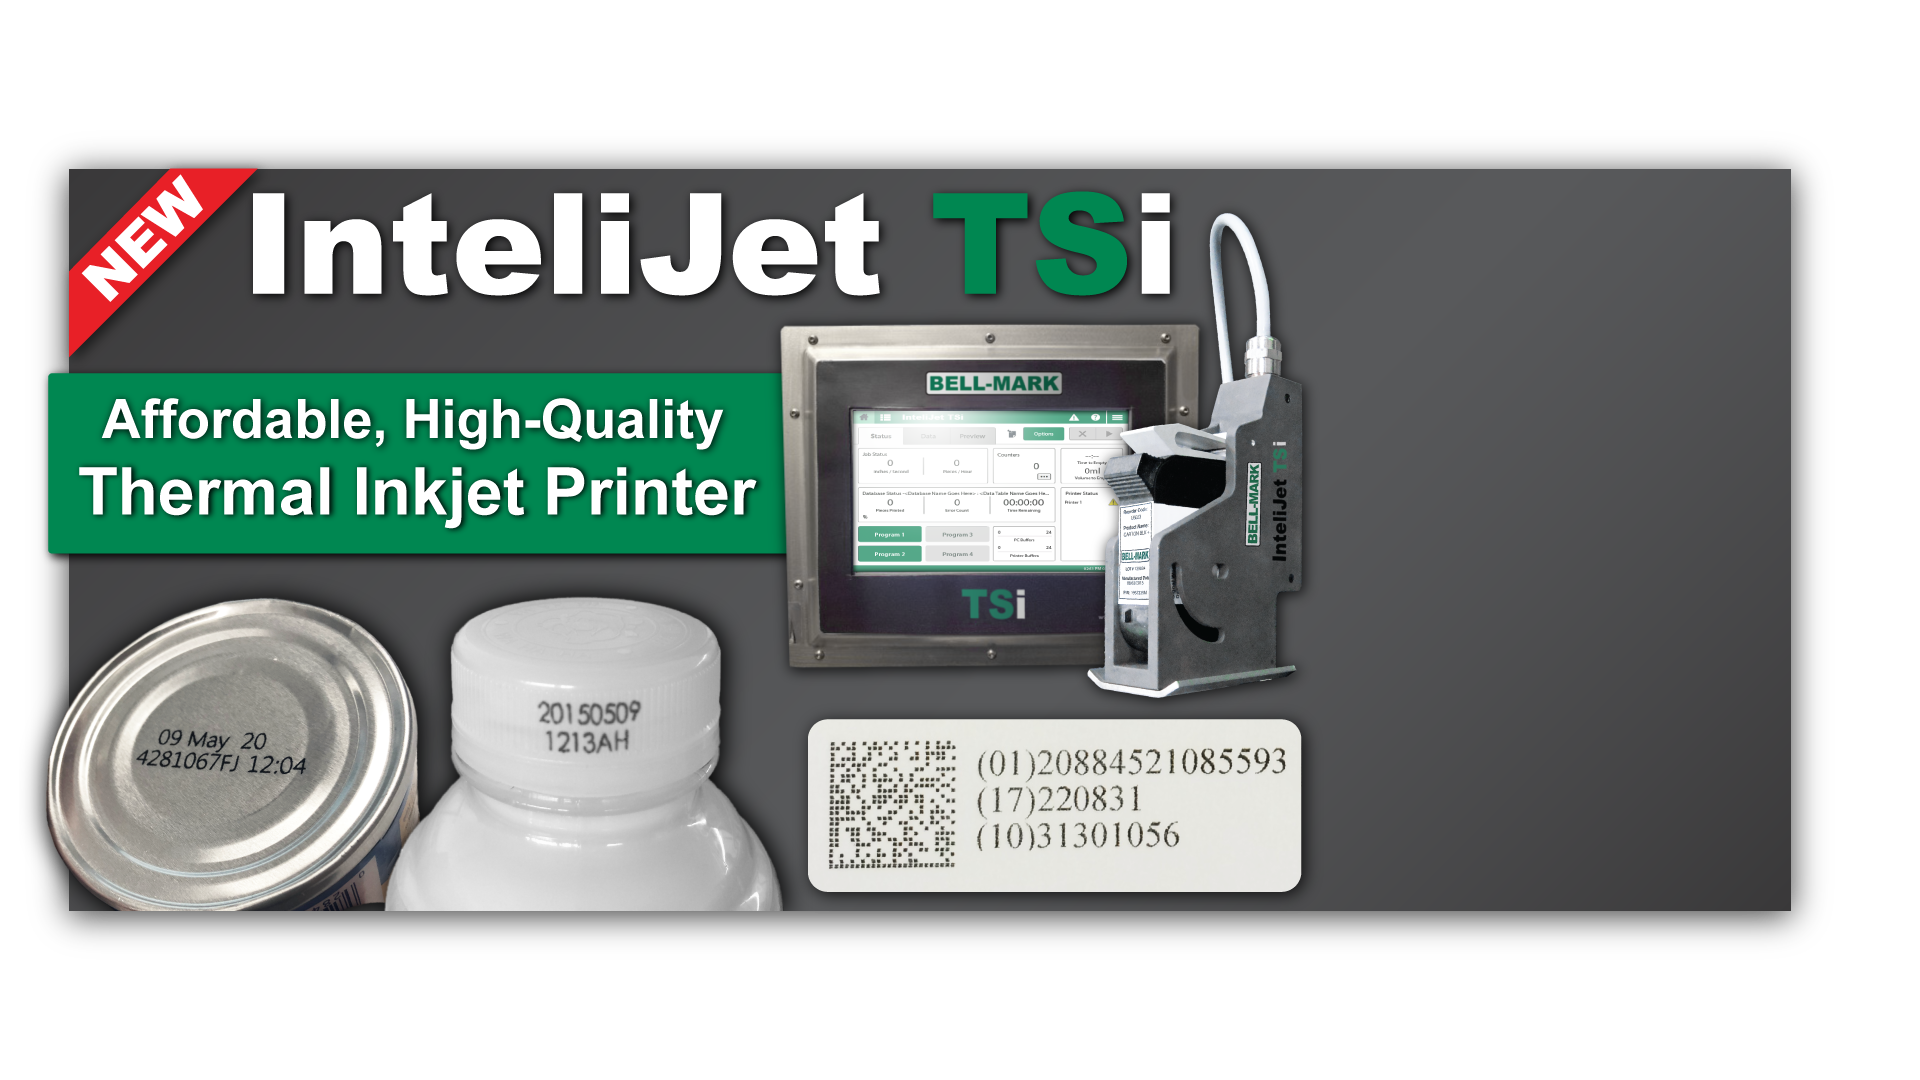 InteliJet TSi - Afforadable, High-quality, Thermal Inkjet Printer